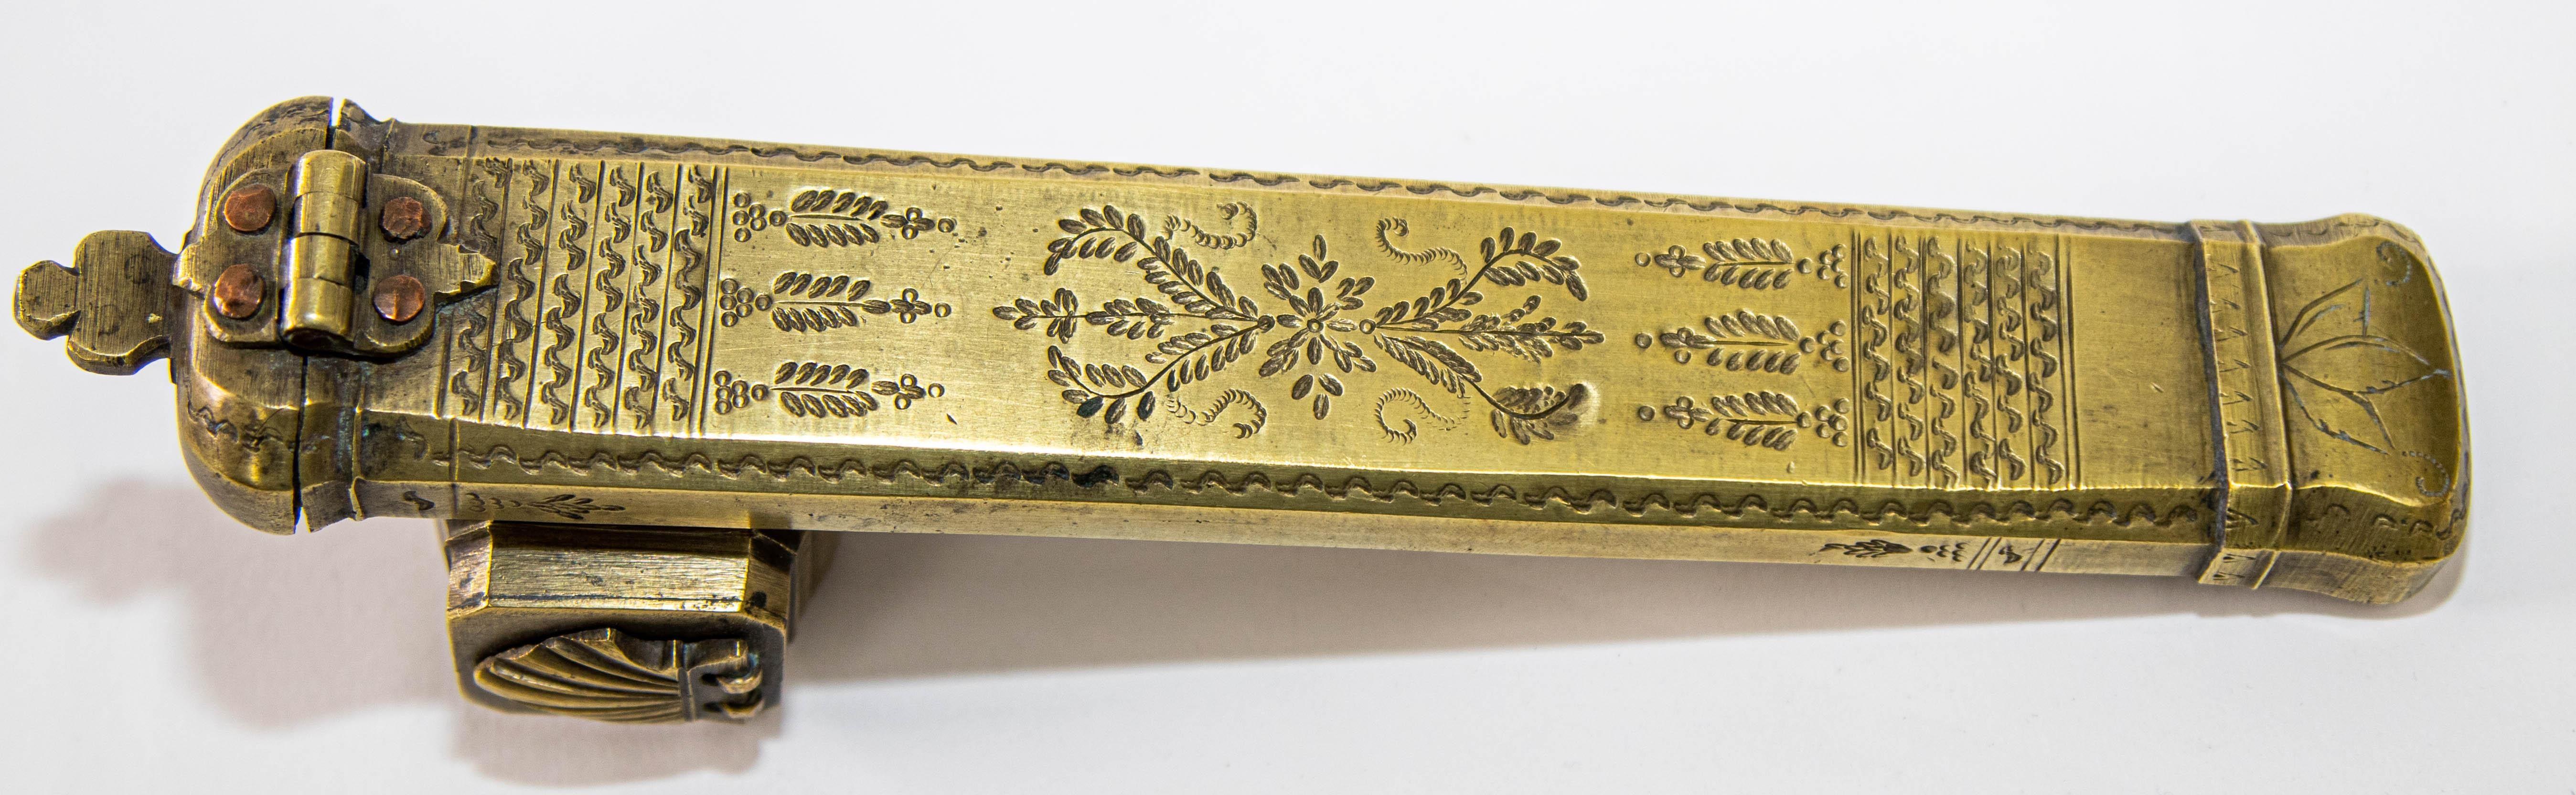 Antique Middle Eastern Islamic Brass Inkwell Qalamdan, circa 1850 For Sale 8